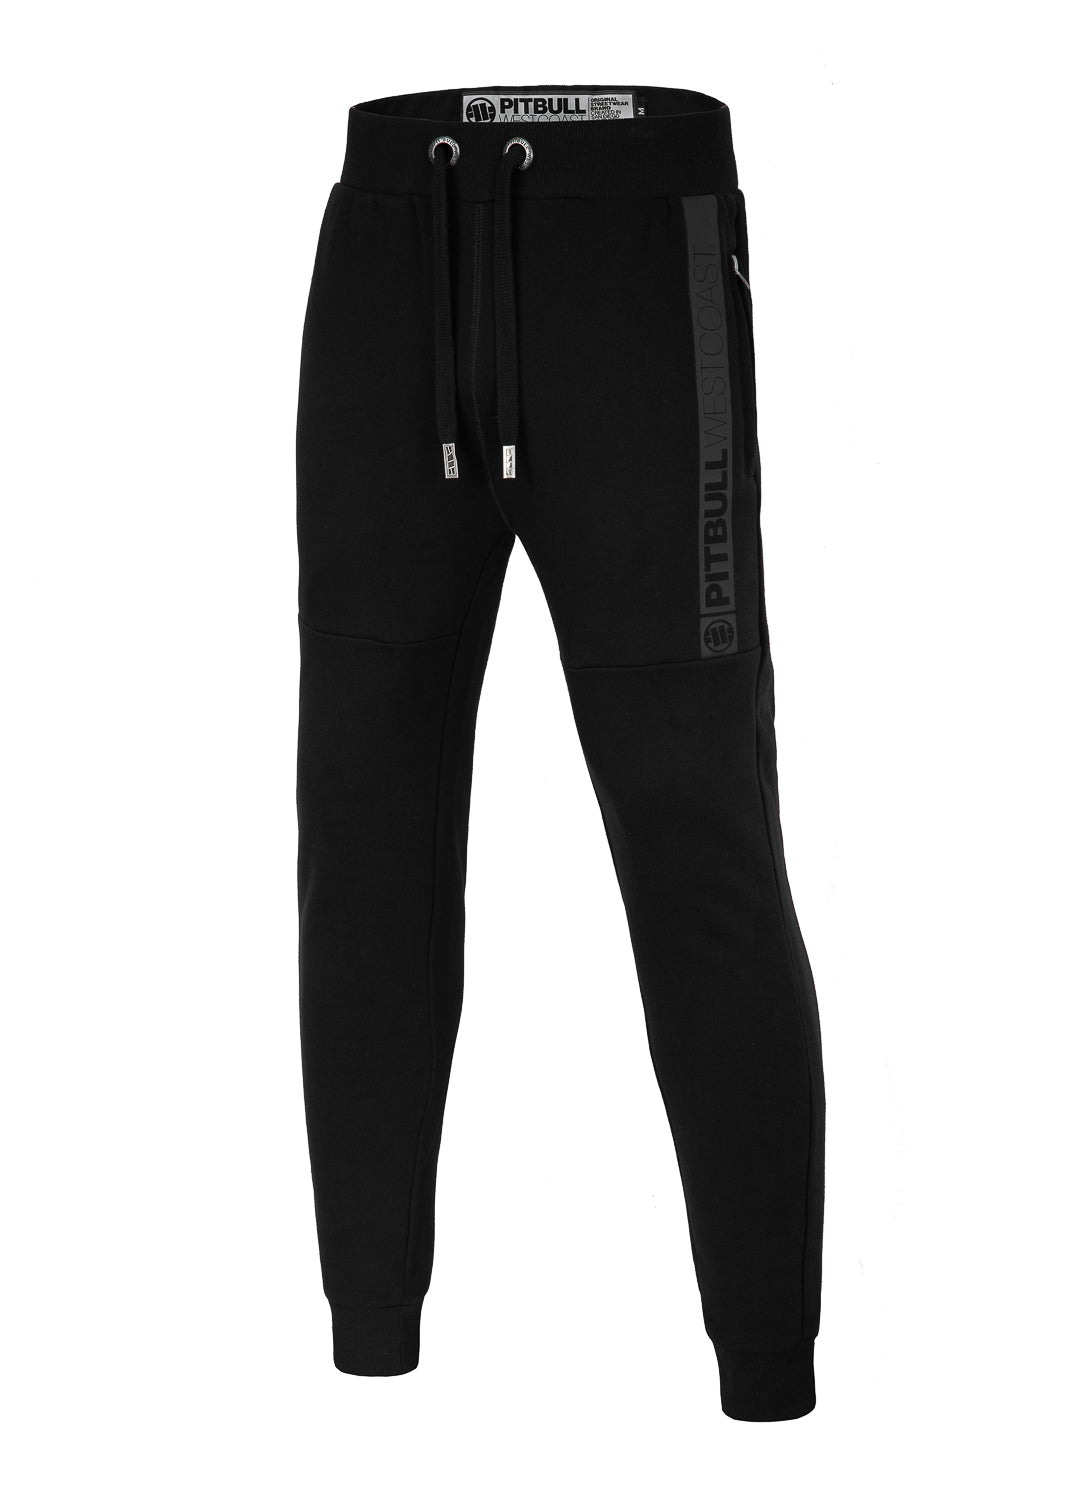 NEW HILLTOP Black Jogging Pants - Pitbull West Coast International Store 